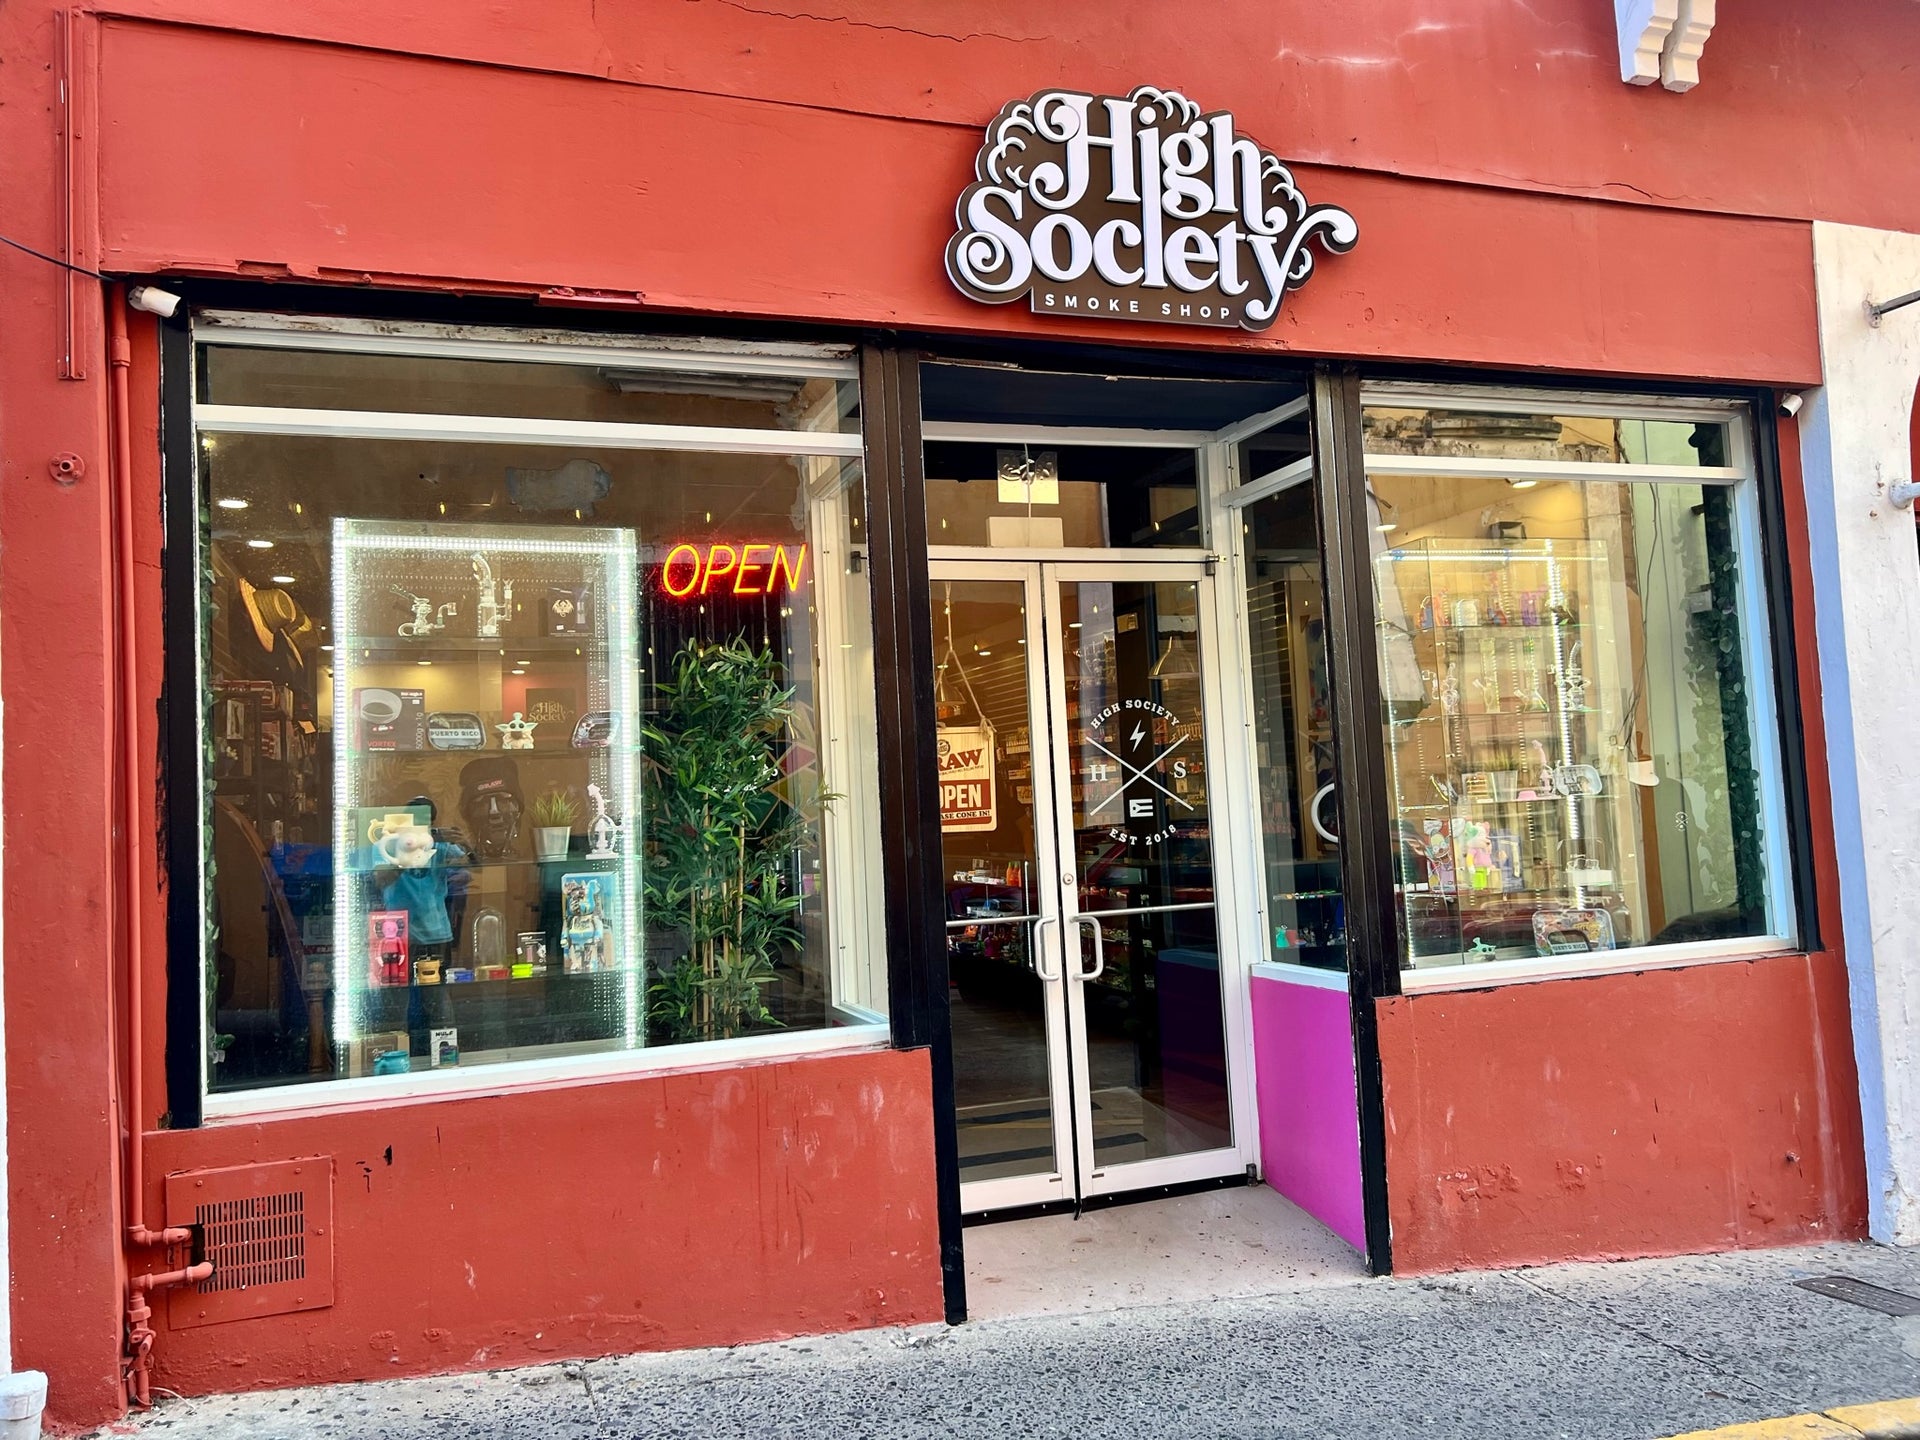 High Society Old San Juan
Established in 2018